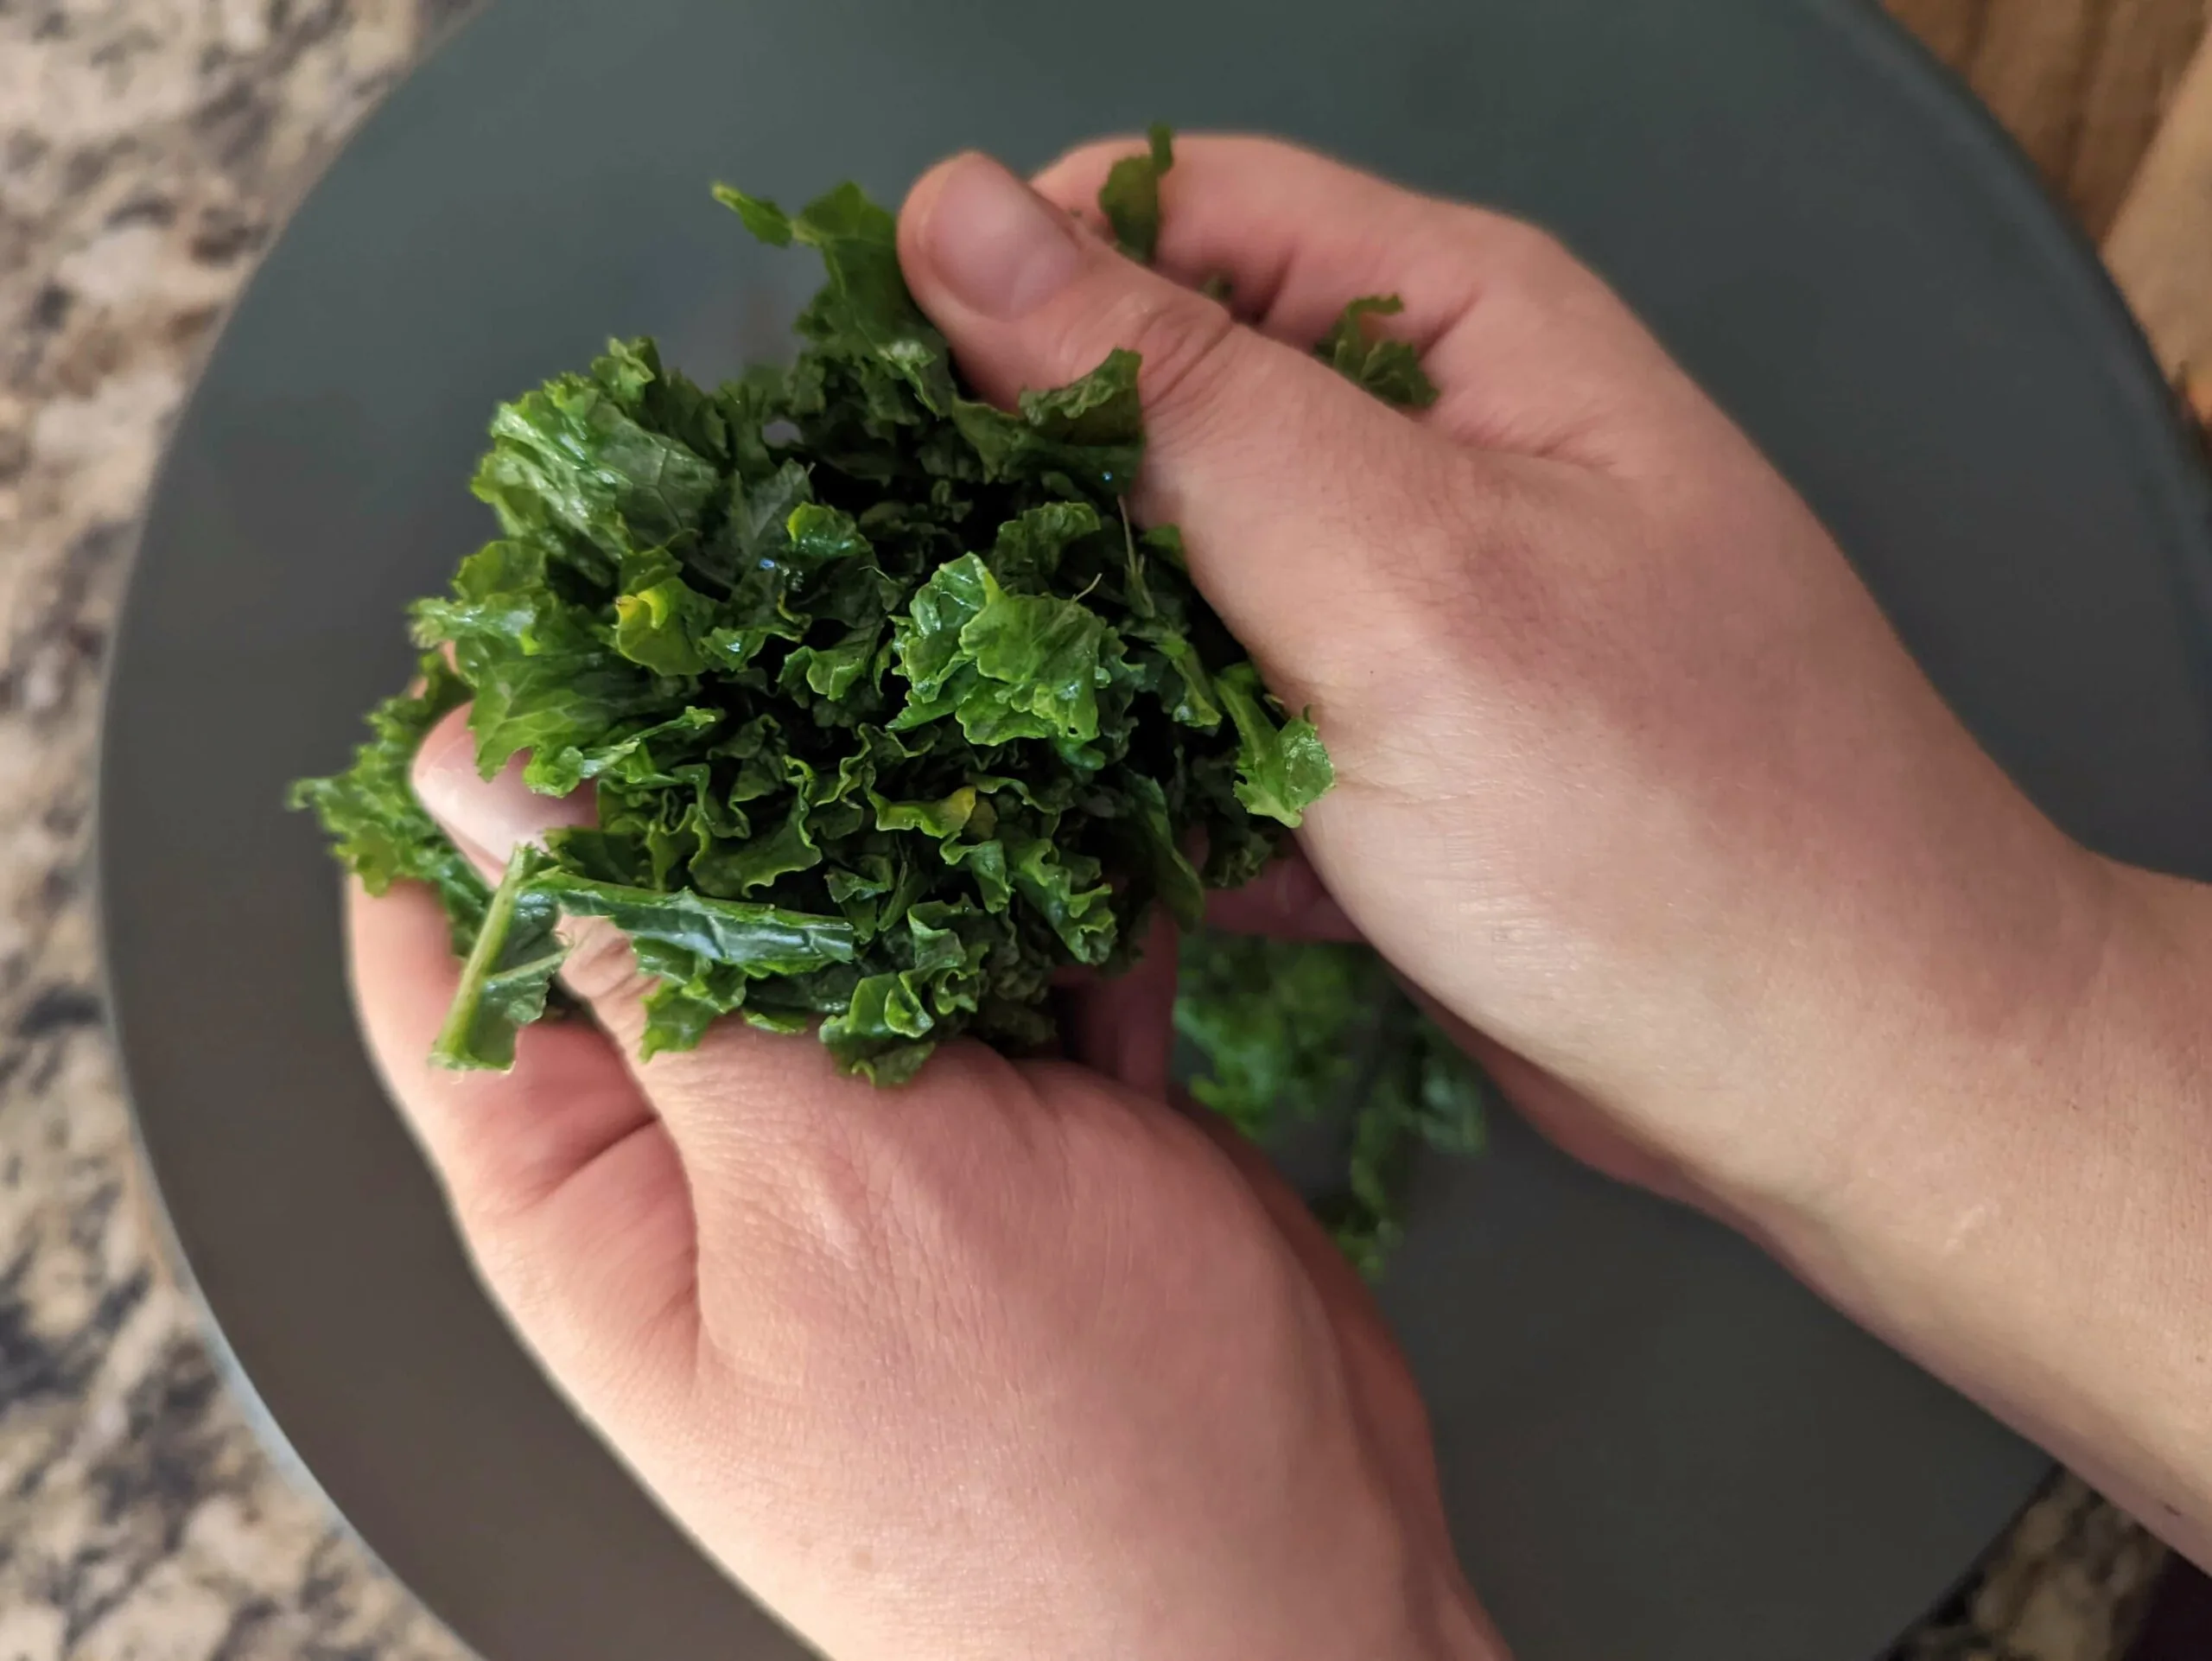 Kale being massaged for the kale salad.